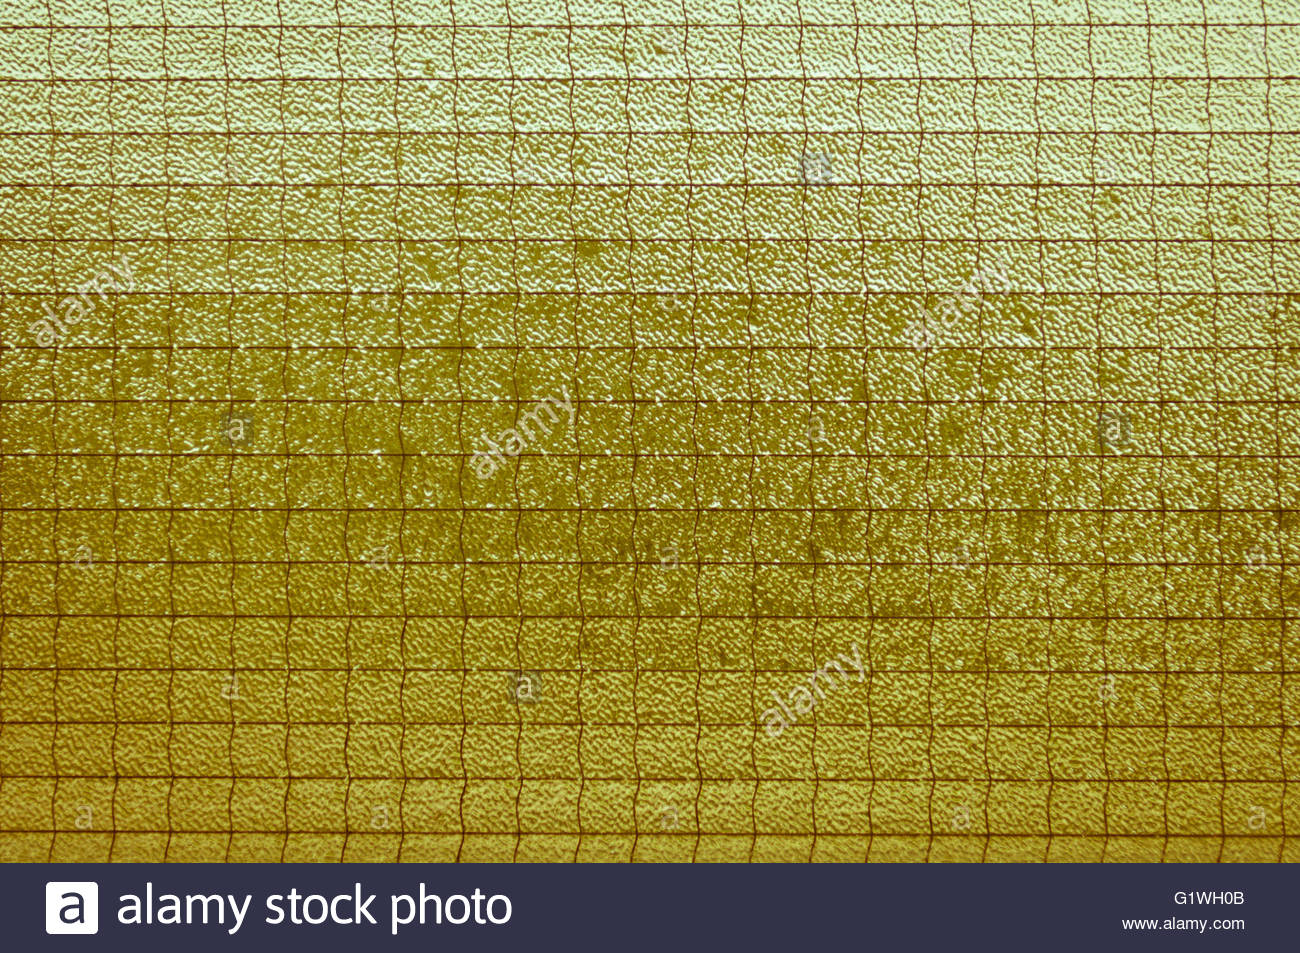 Yellowish Brown Stock Photos Image